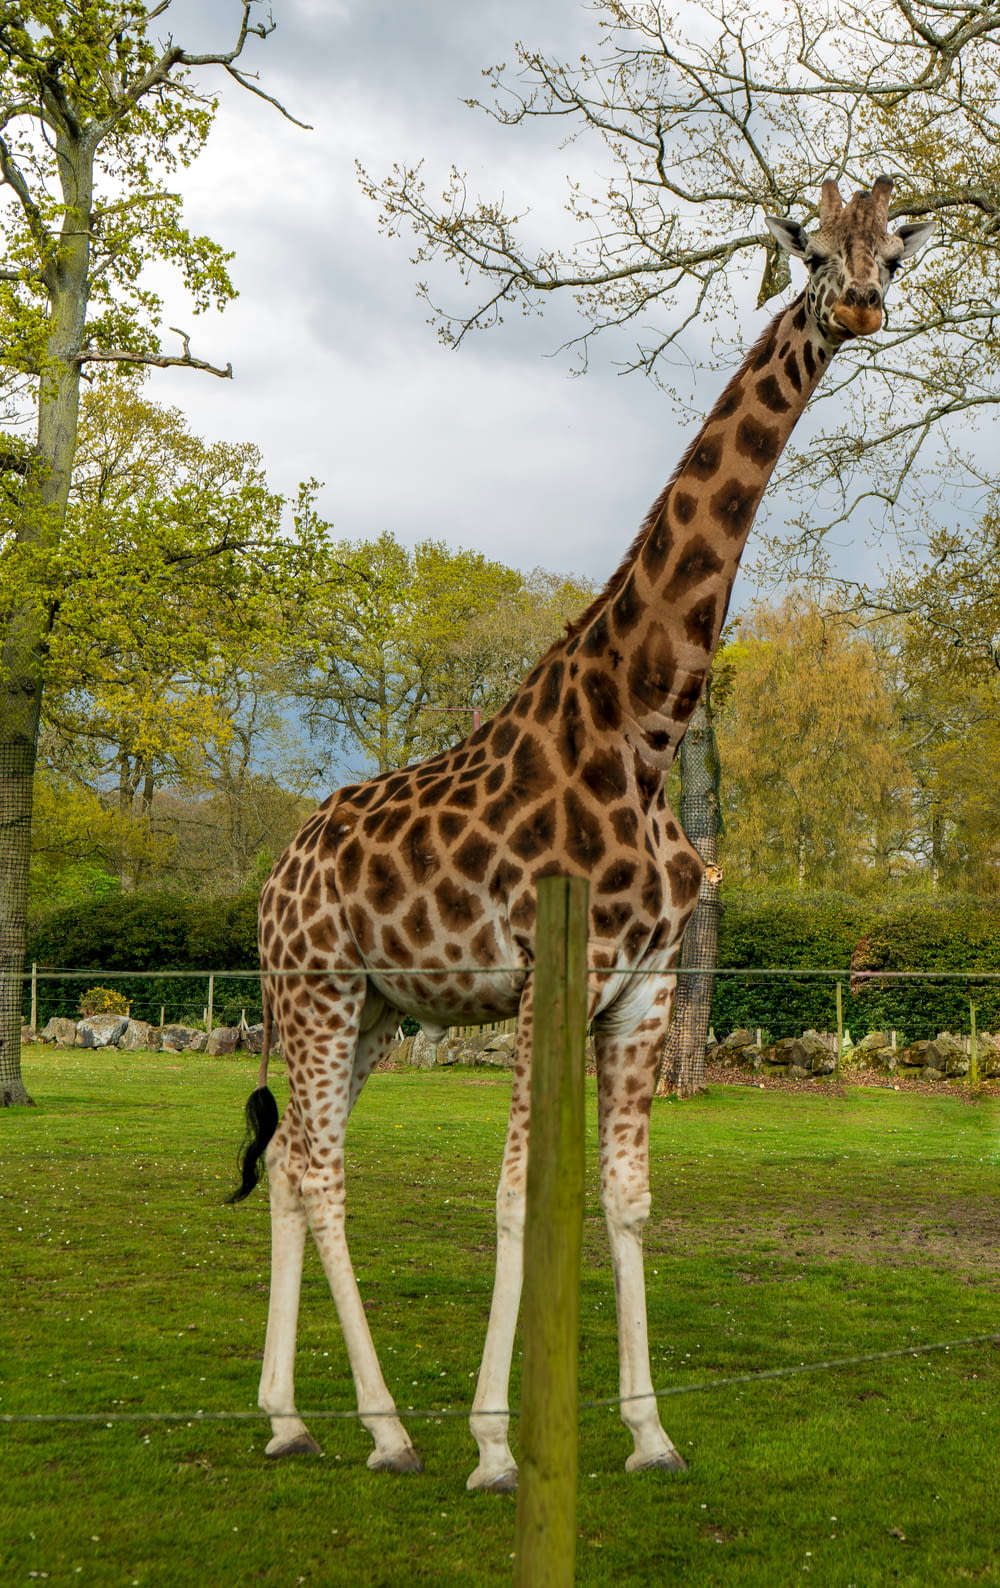 a tall giraffe standing next to a tree on a lush green field